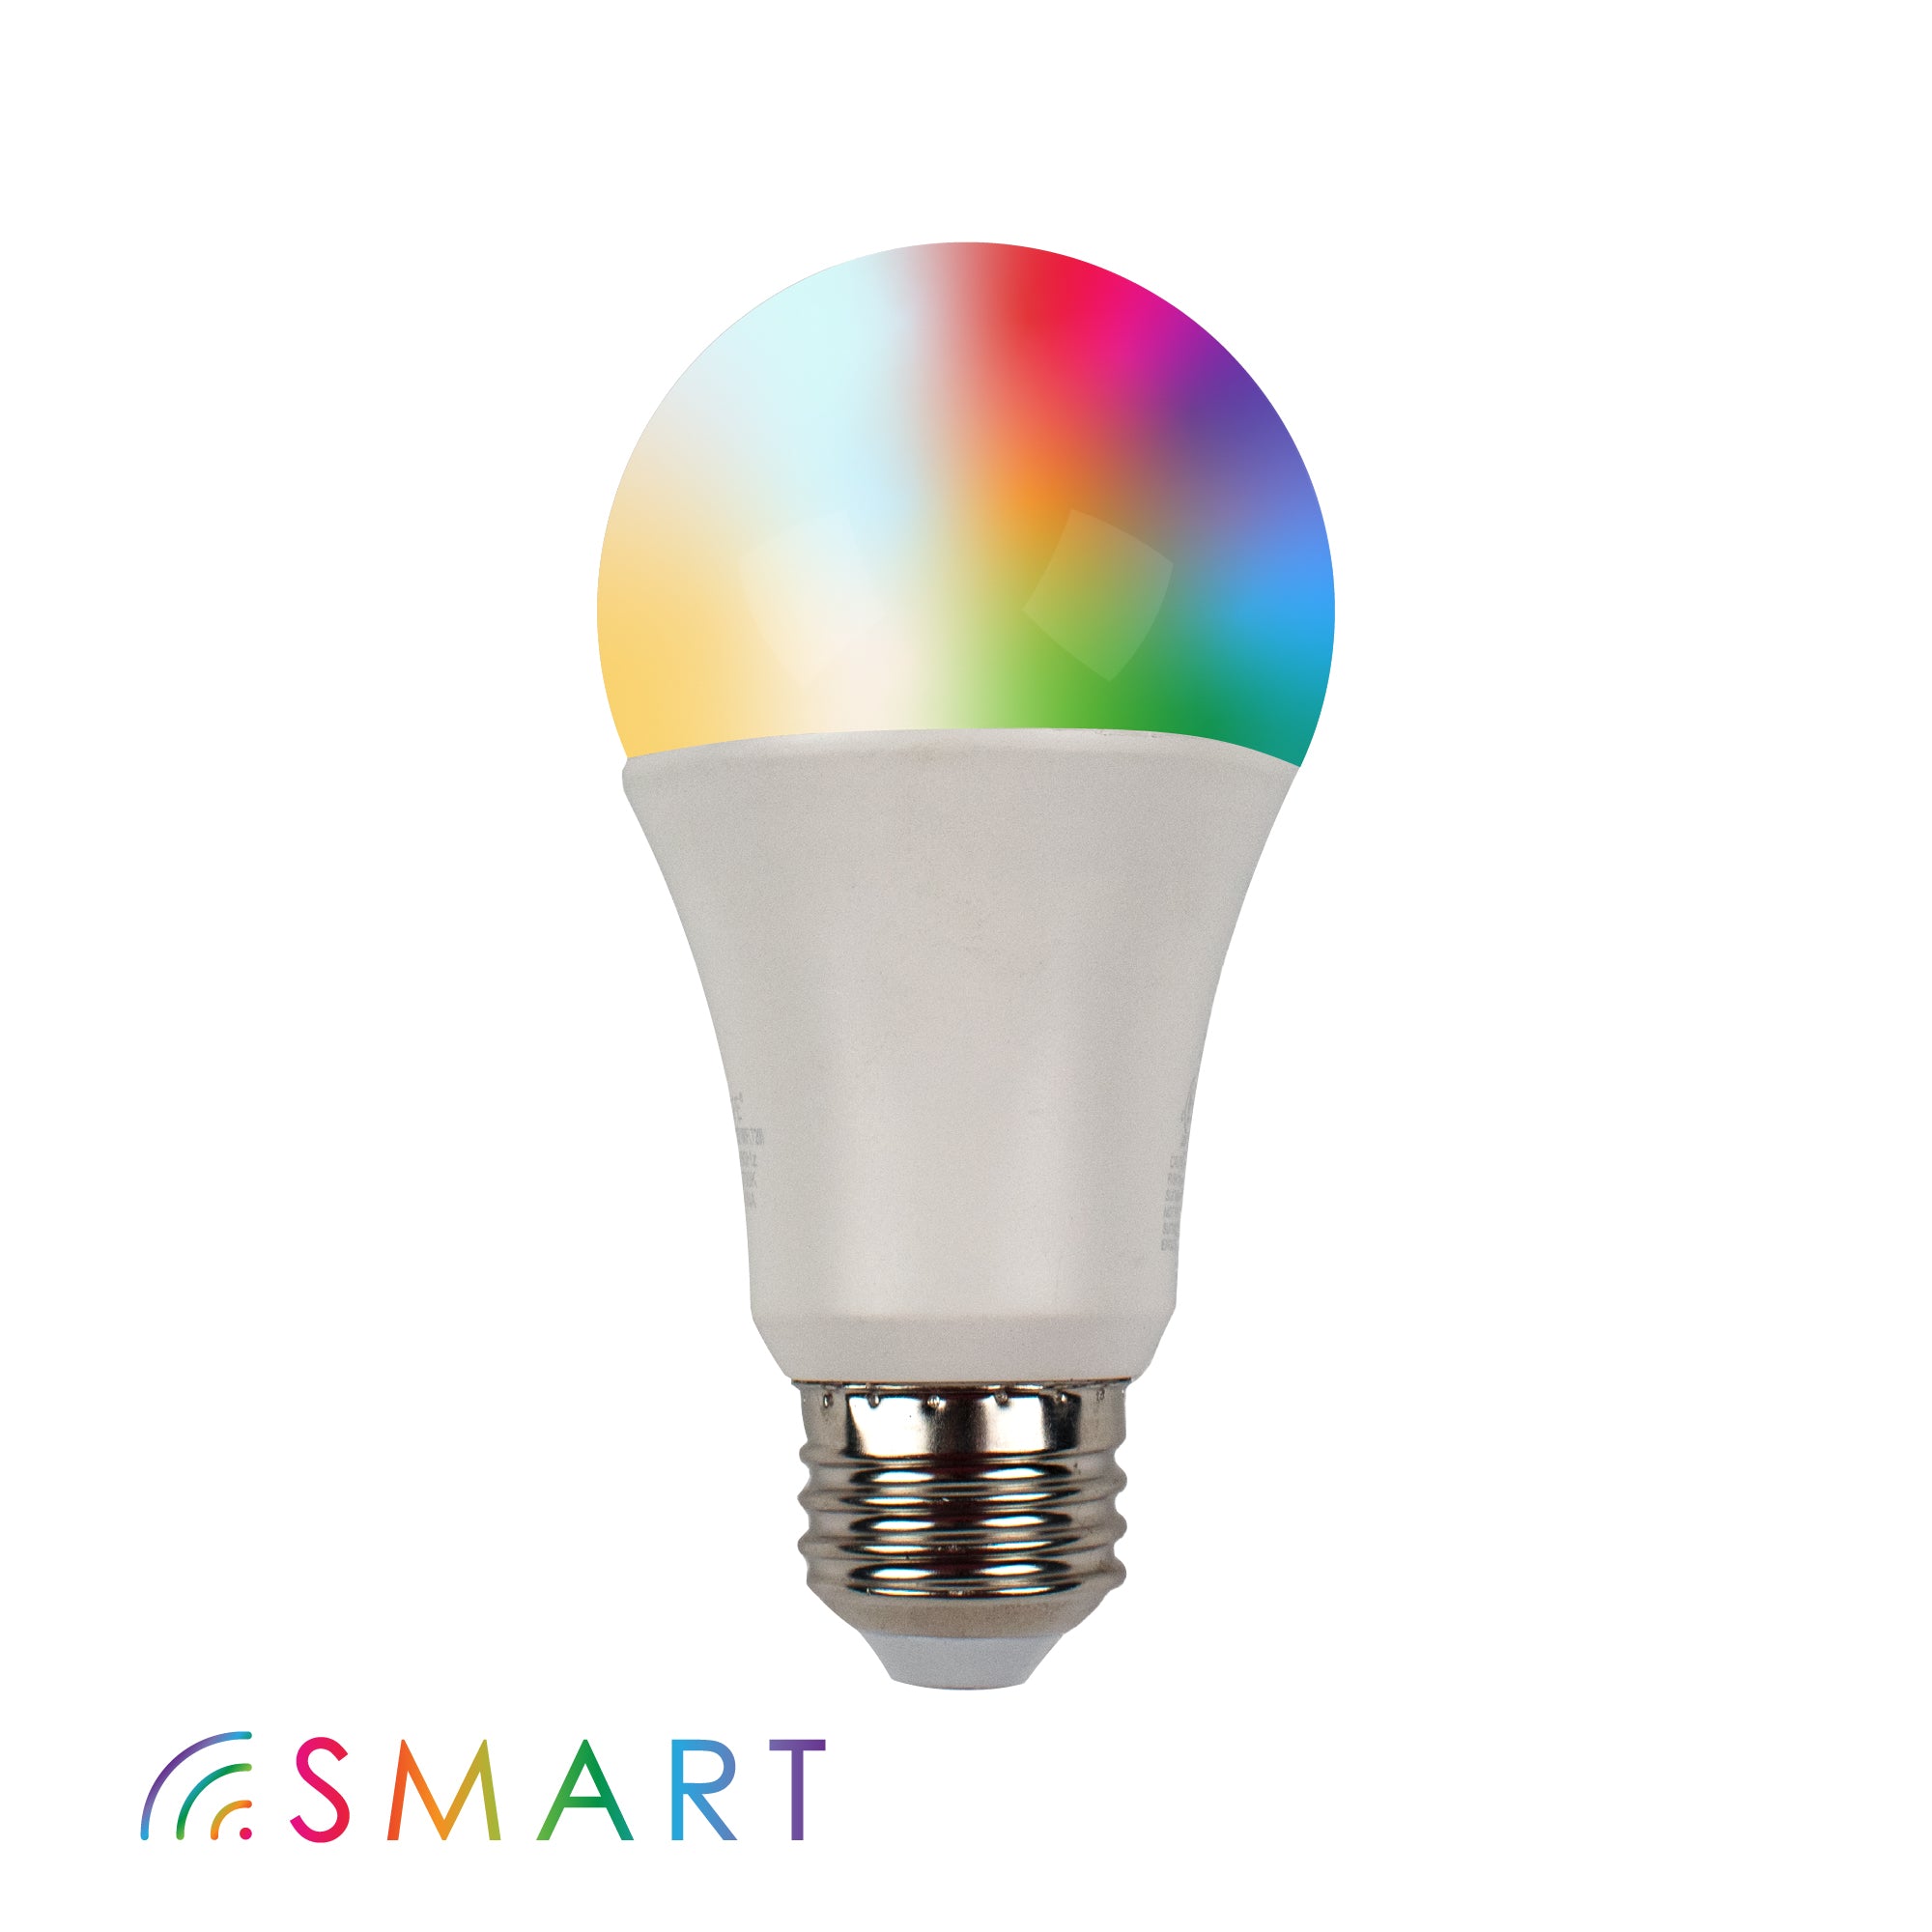 CLEANLIFE® Smart A19 LED Light Bulb White, WiFi + Bluetooth